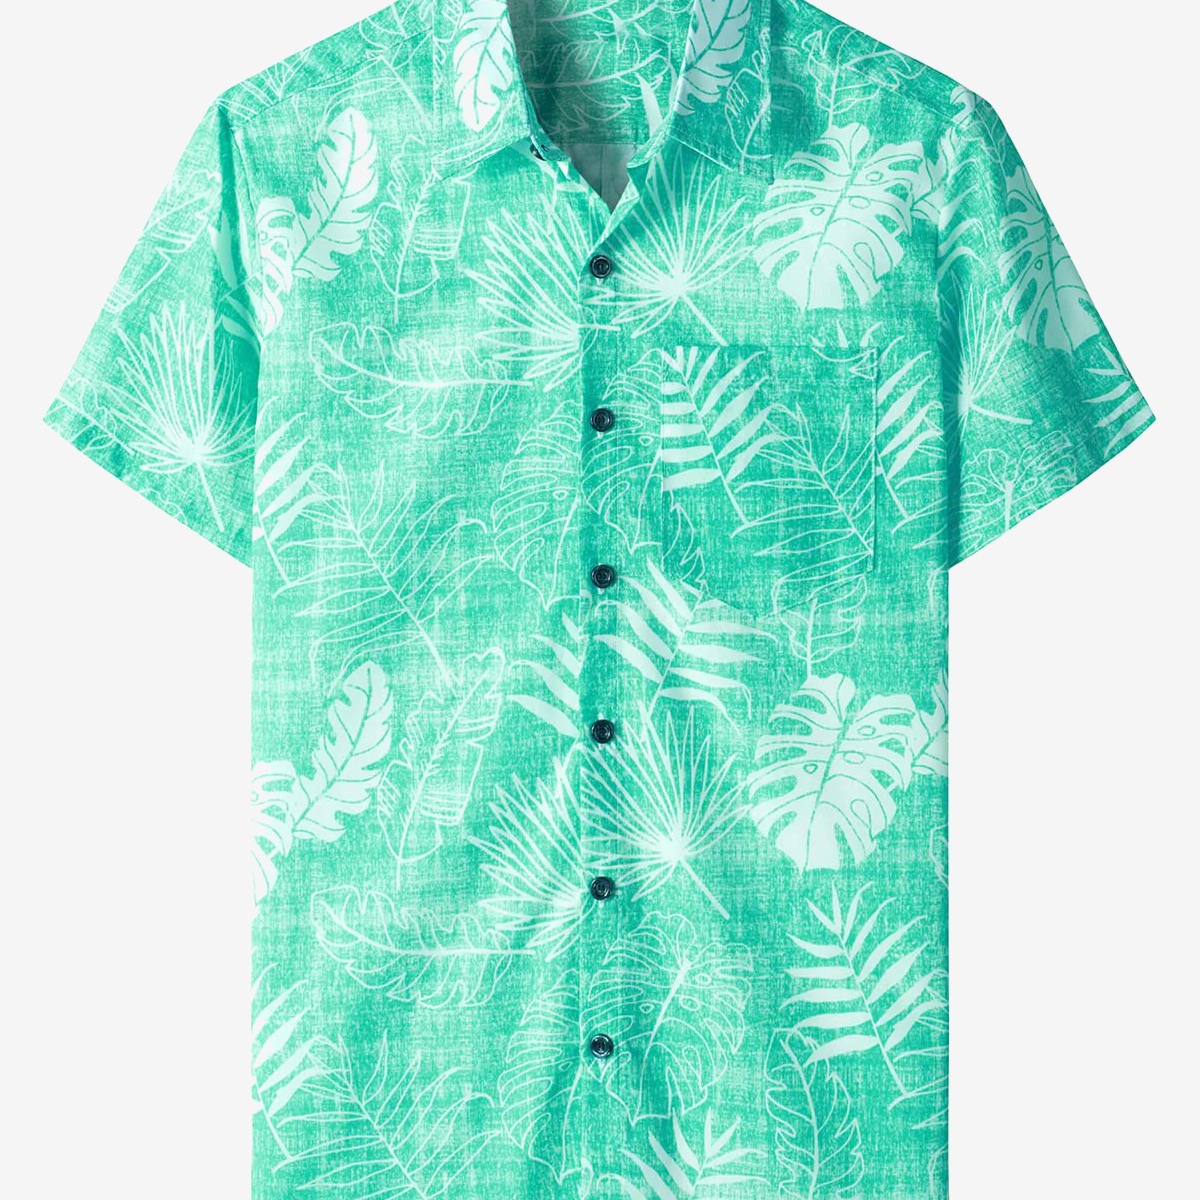 Men's Green Hawaiian Summer Casual Pocket Tropical Plant Print Beach Holiday Short Sleeve Shirt